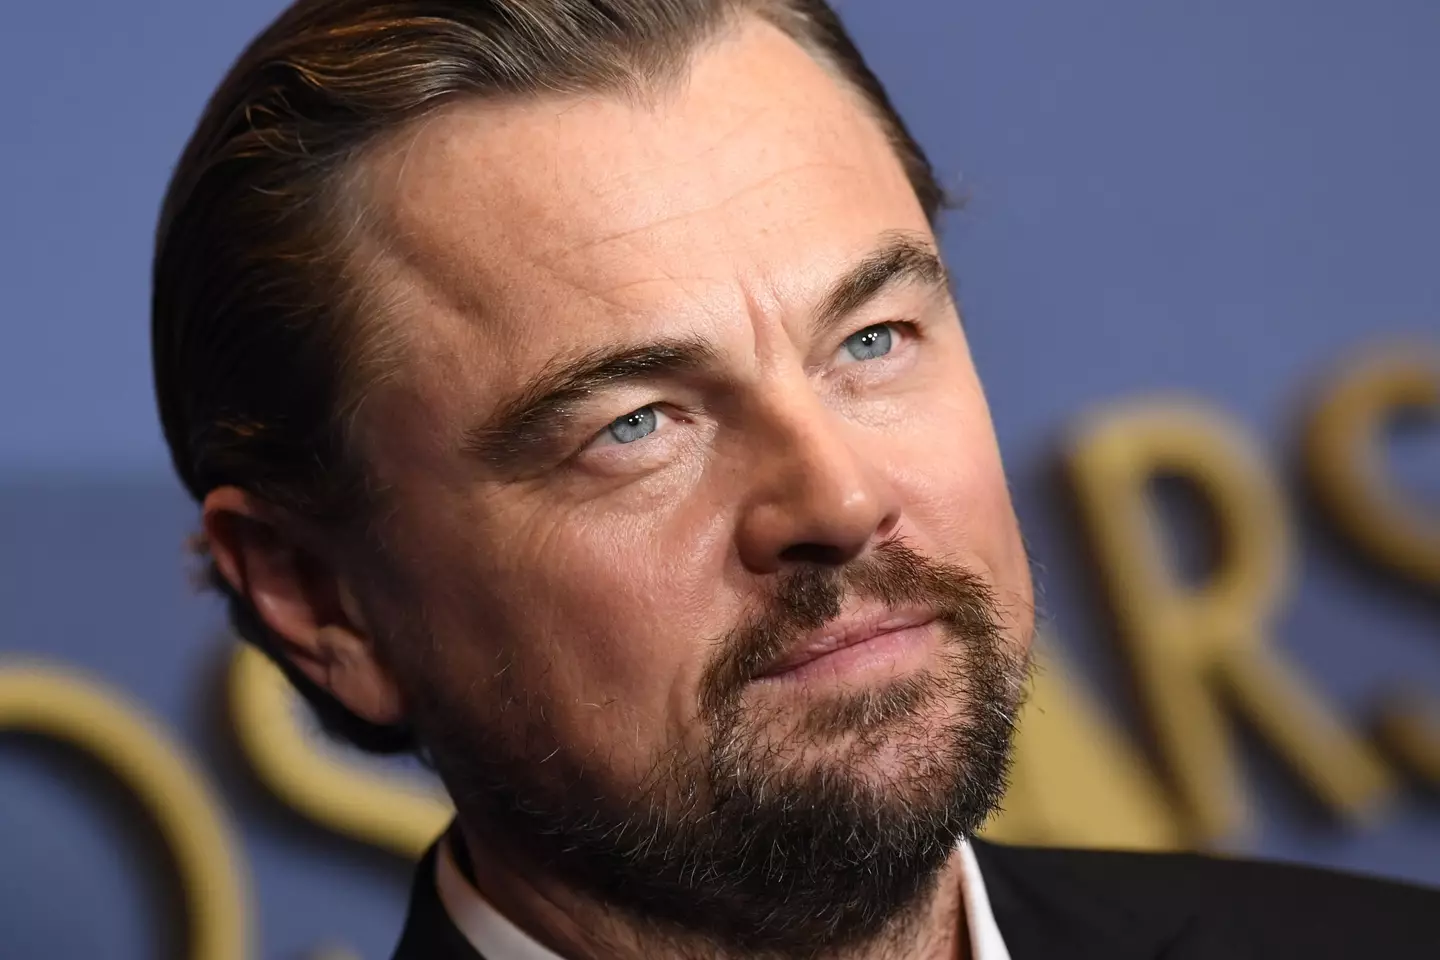 Leonardo DiCaprio is said to be 'smitten' with Ceretti.